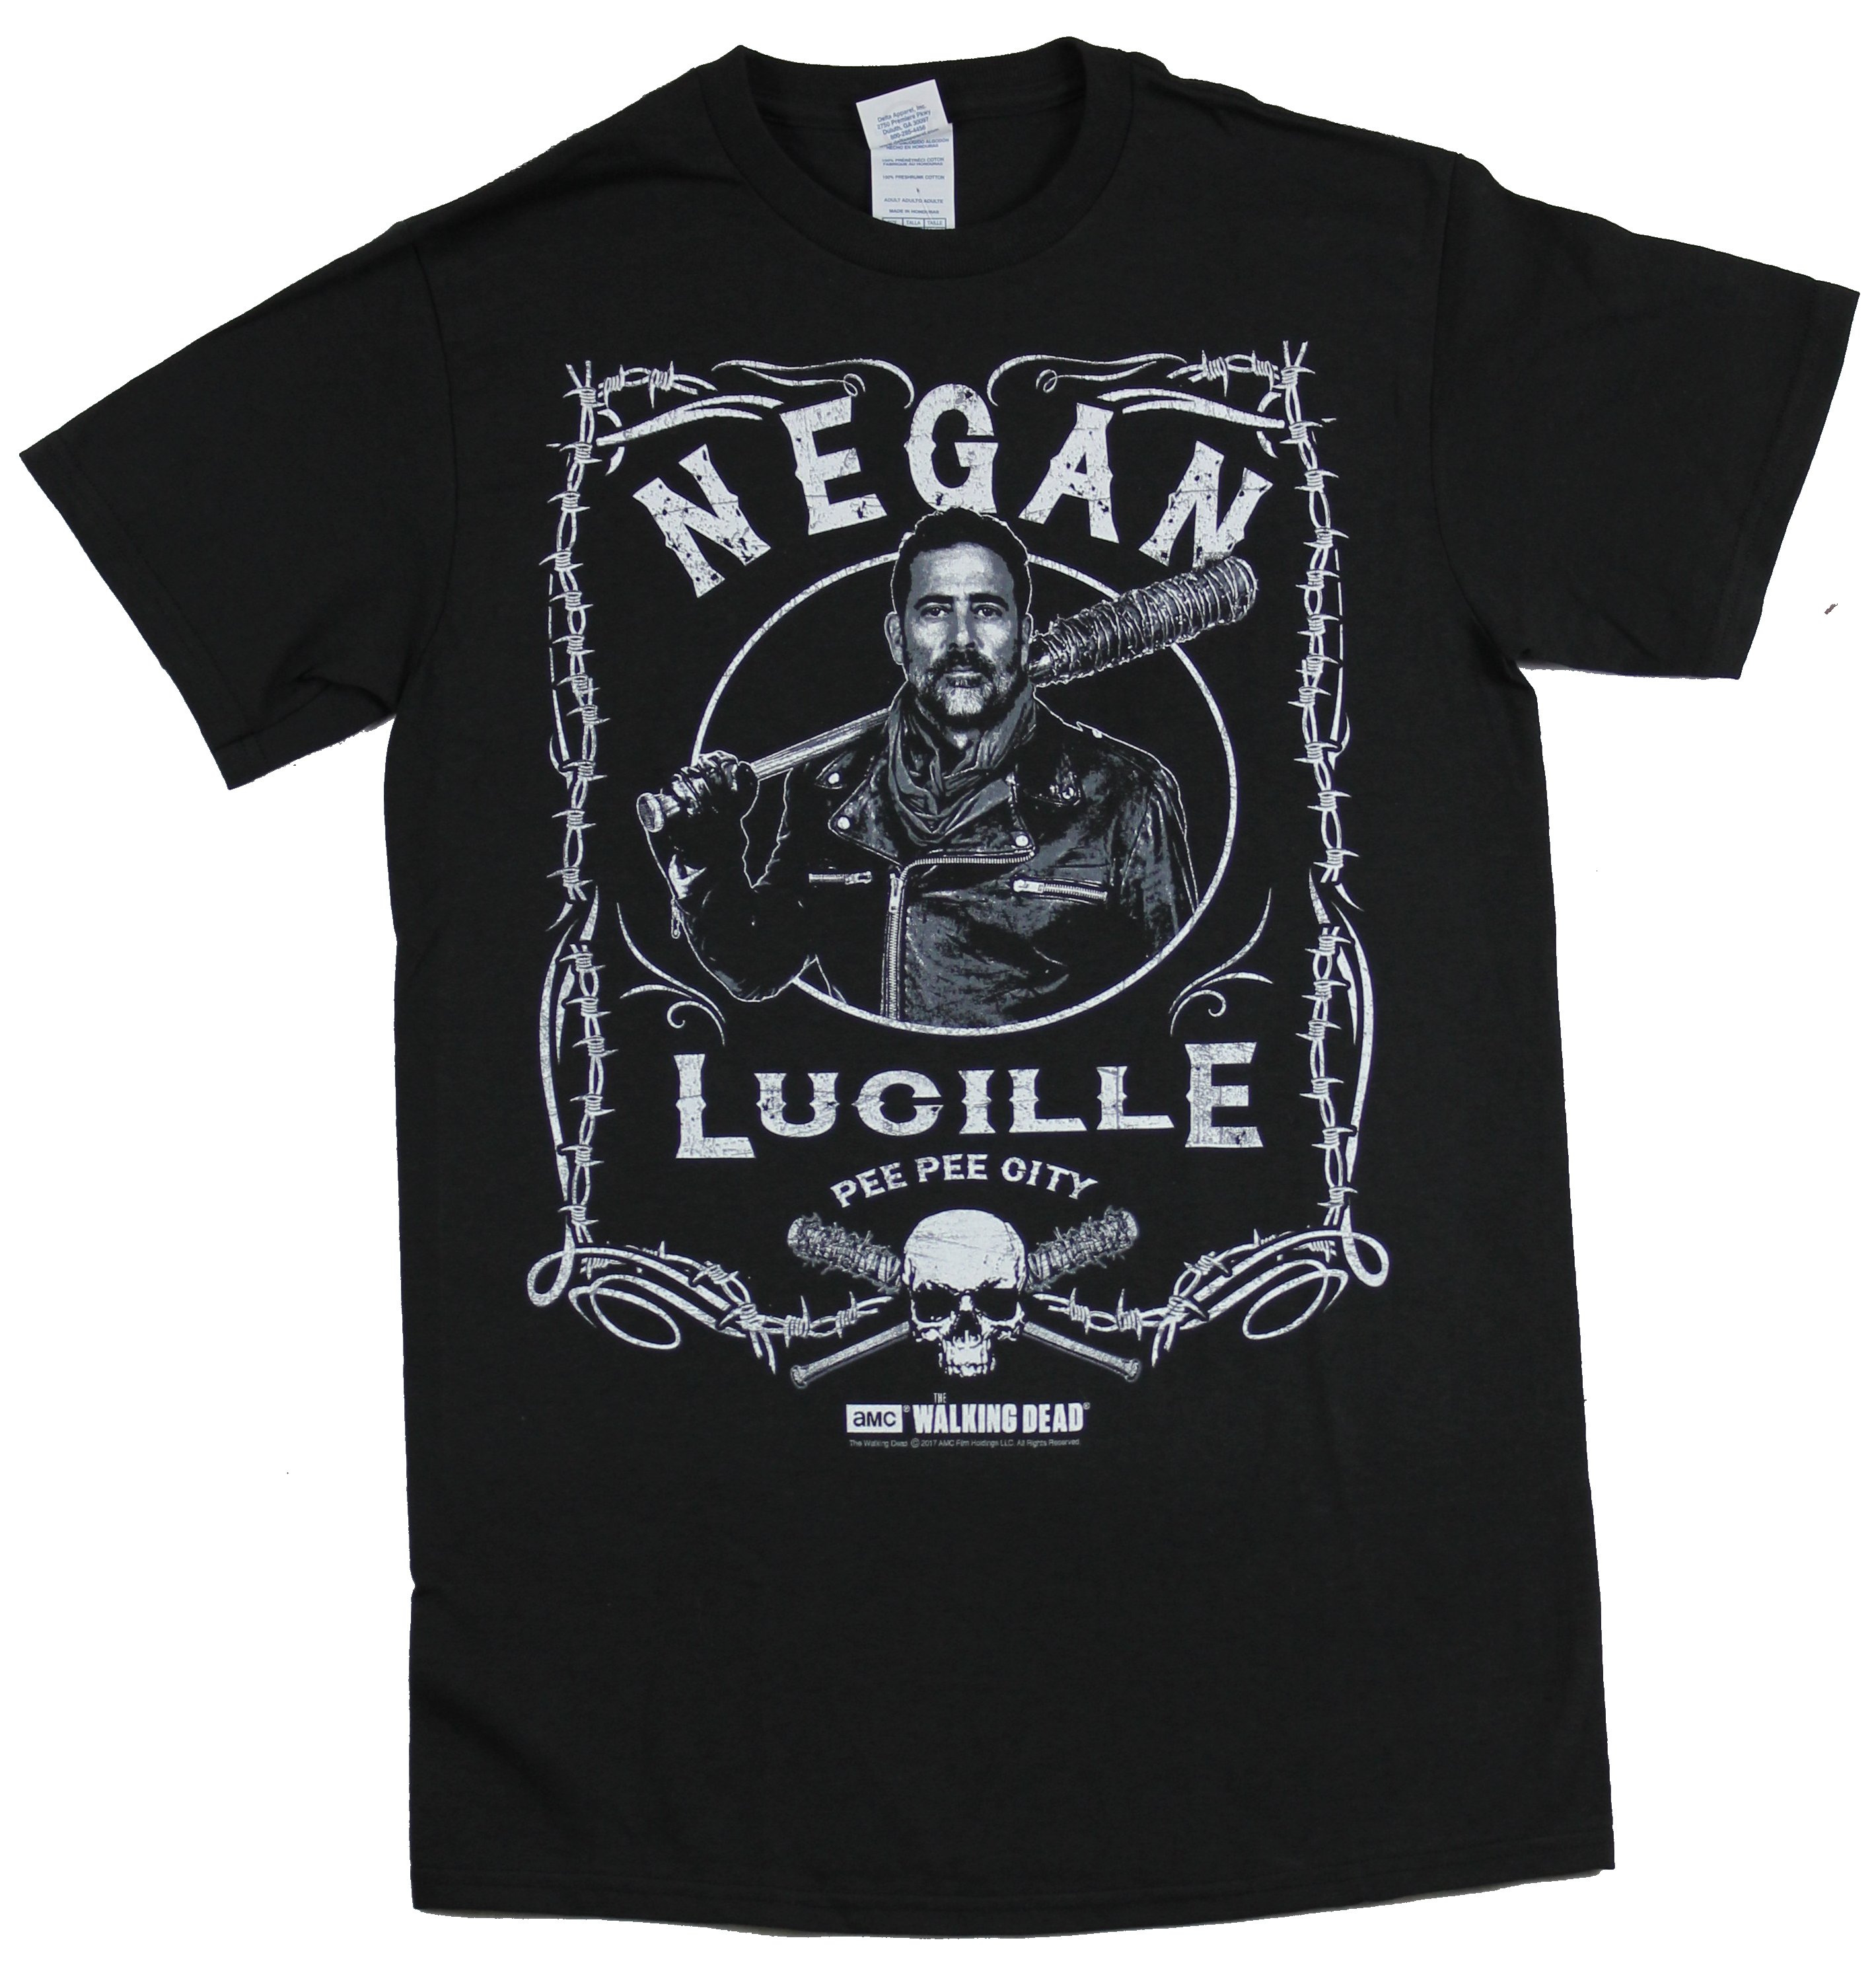 IMPB The Walking Dead  Mens T-Shirt - Negan Lucille Pee Pee City Label on black